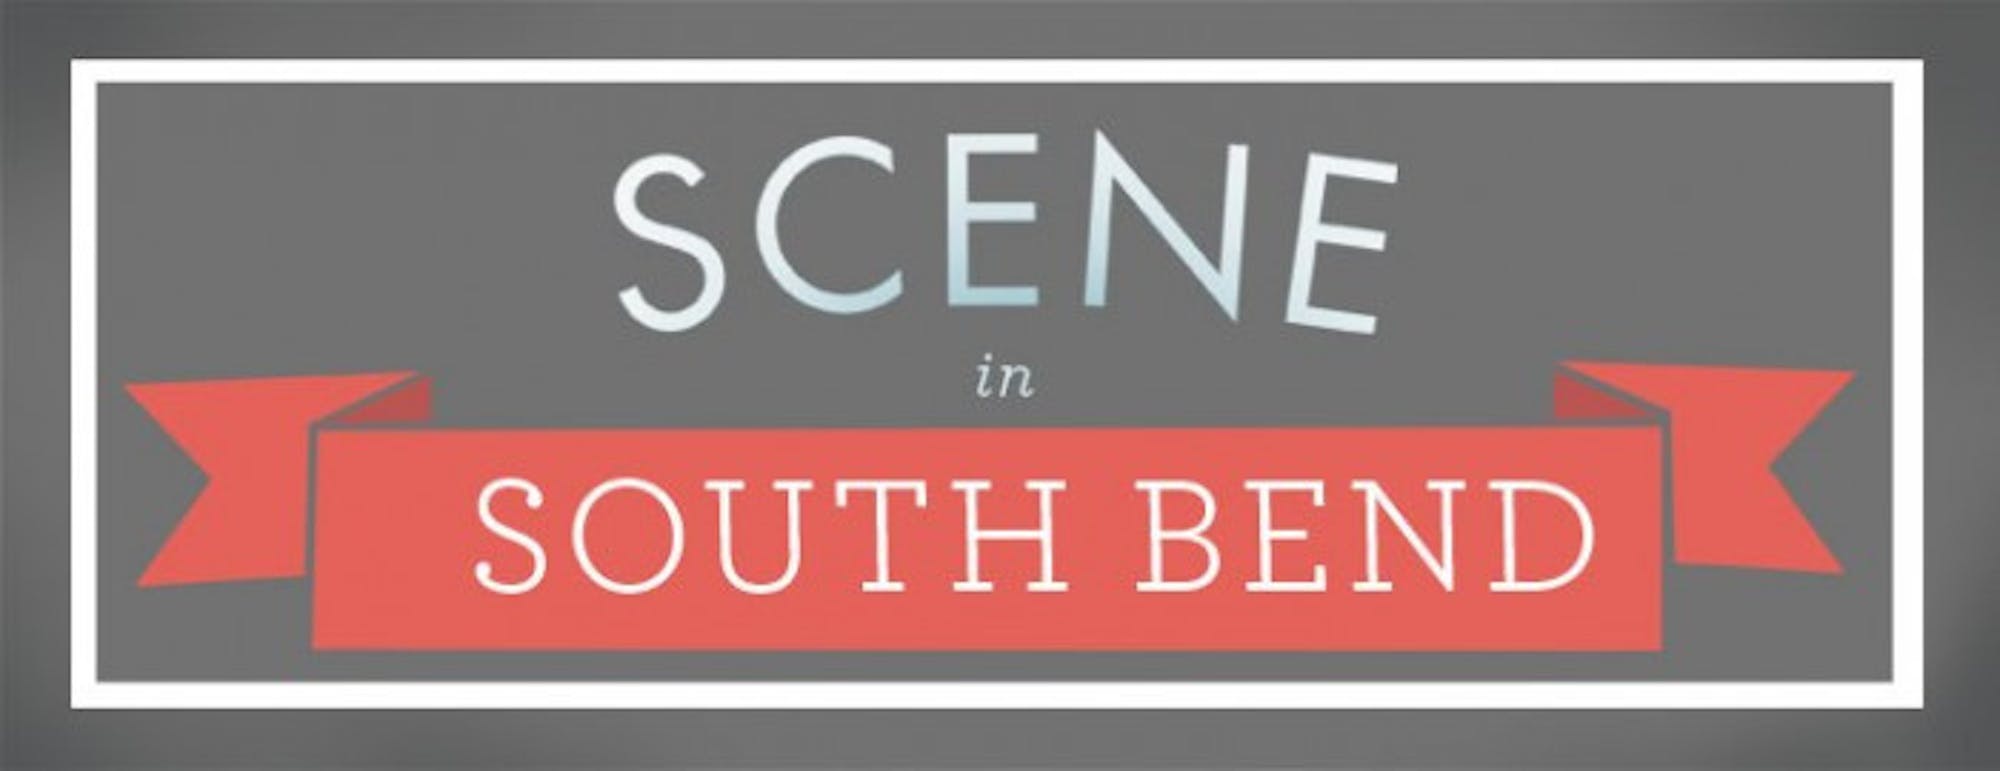 scene-web-banner